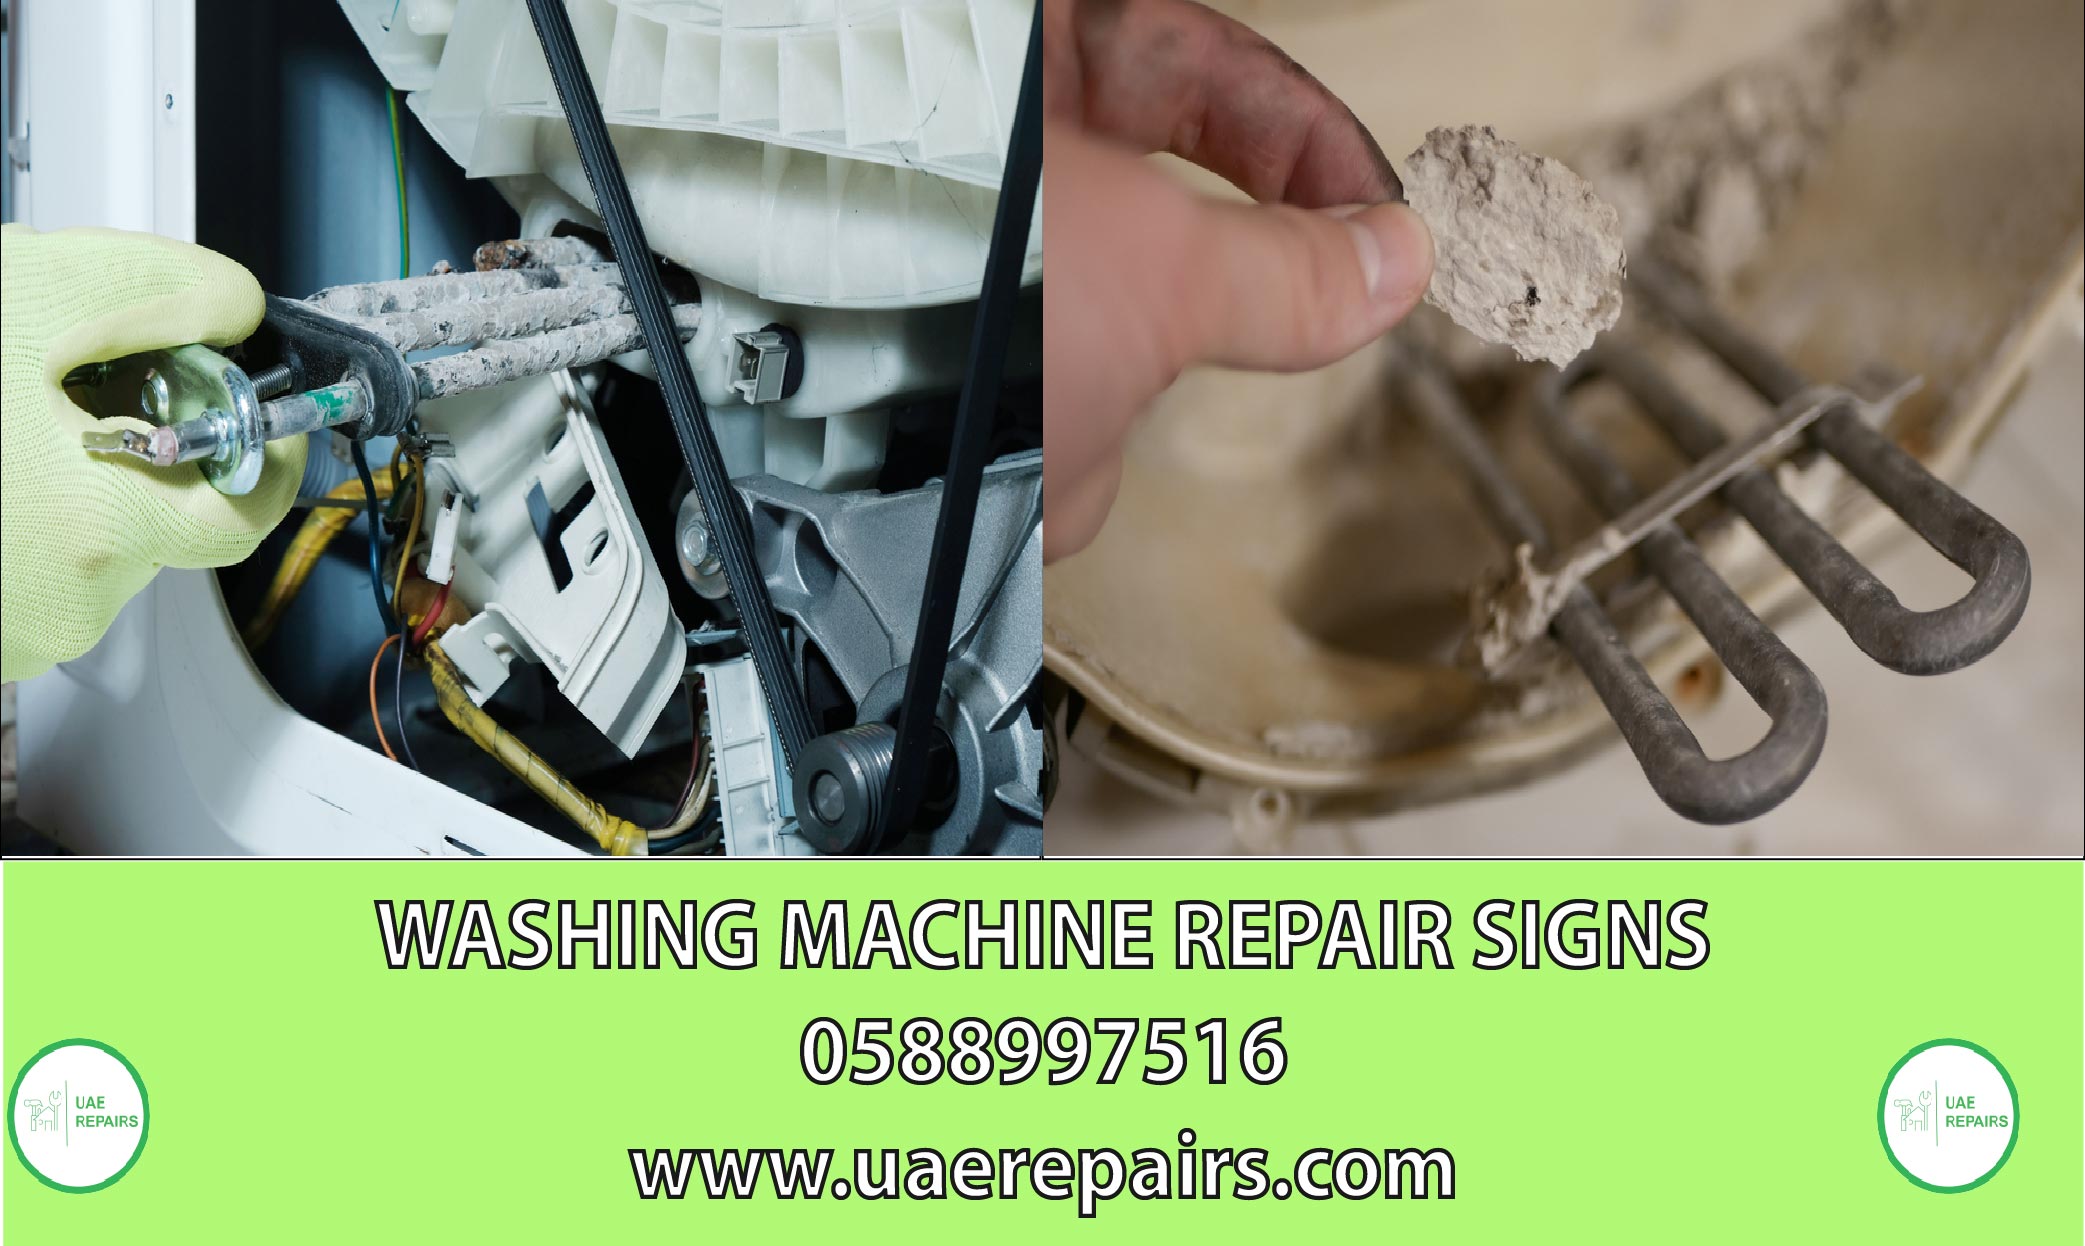 UAE REPAIRS Signs You Need Washing Machine Repair Dubai Service